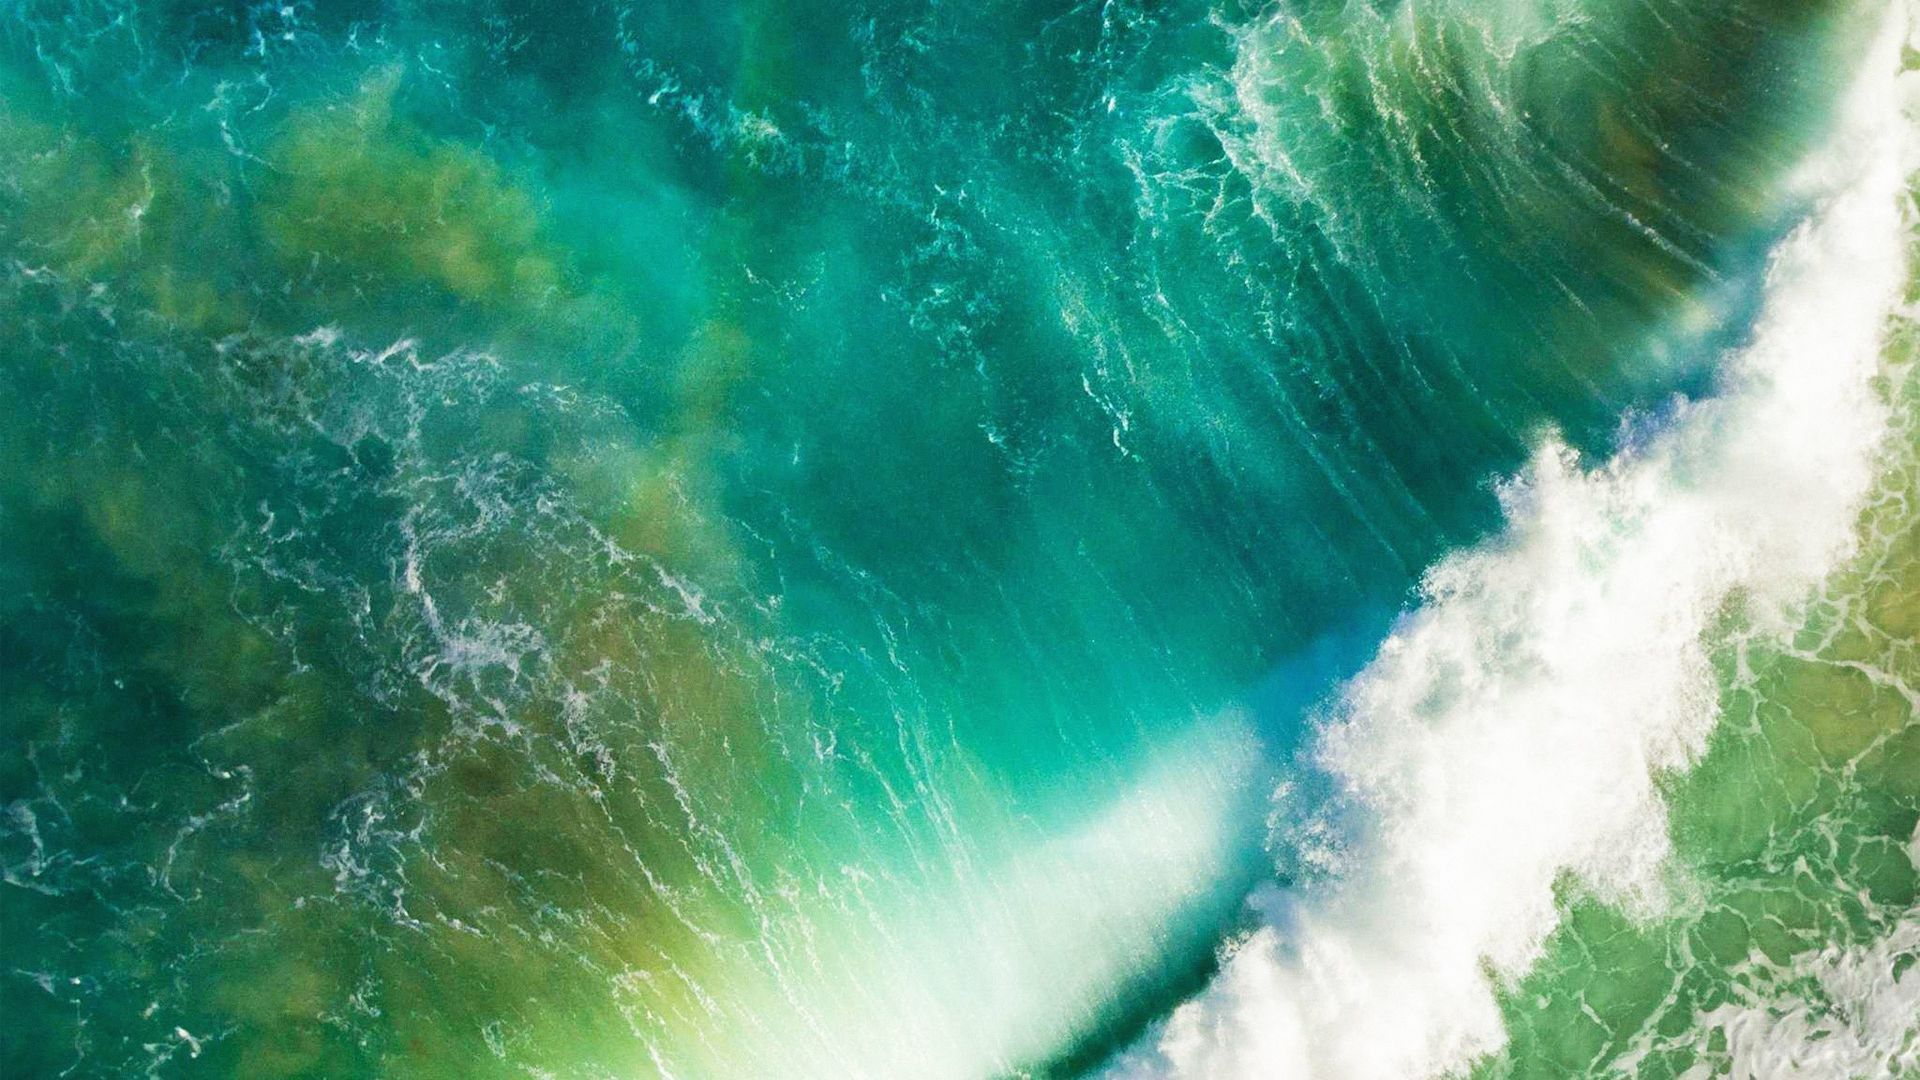 MAC Wallpaper, Background, Beautiful, Green, Mac, Water, Brands